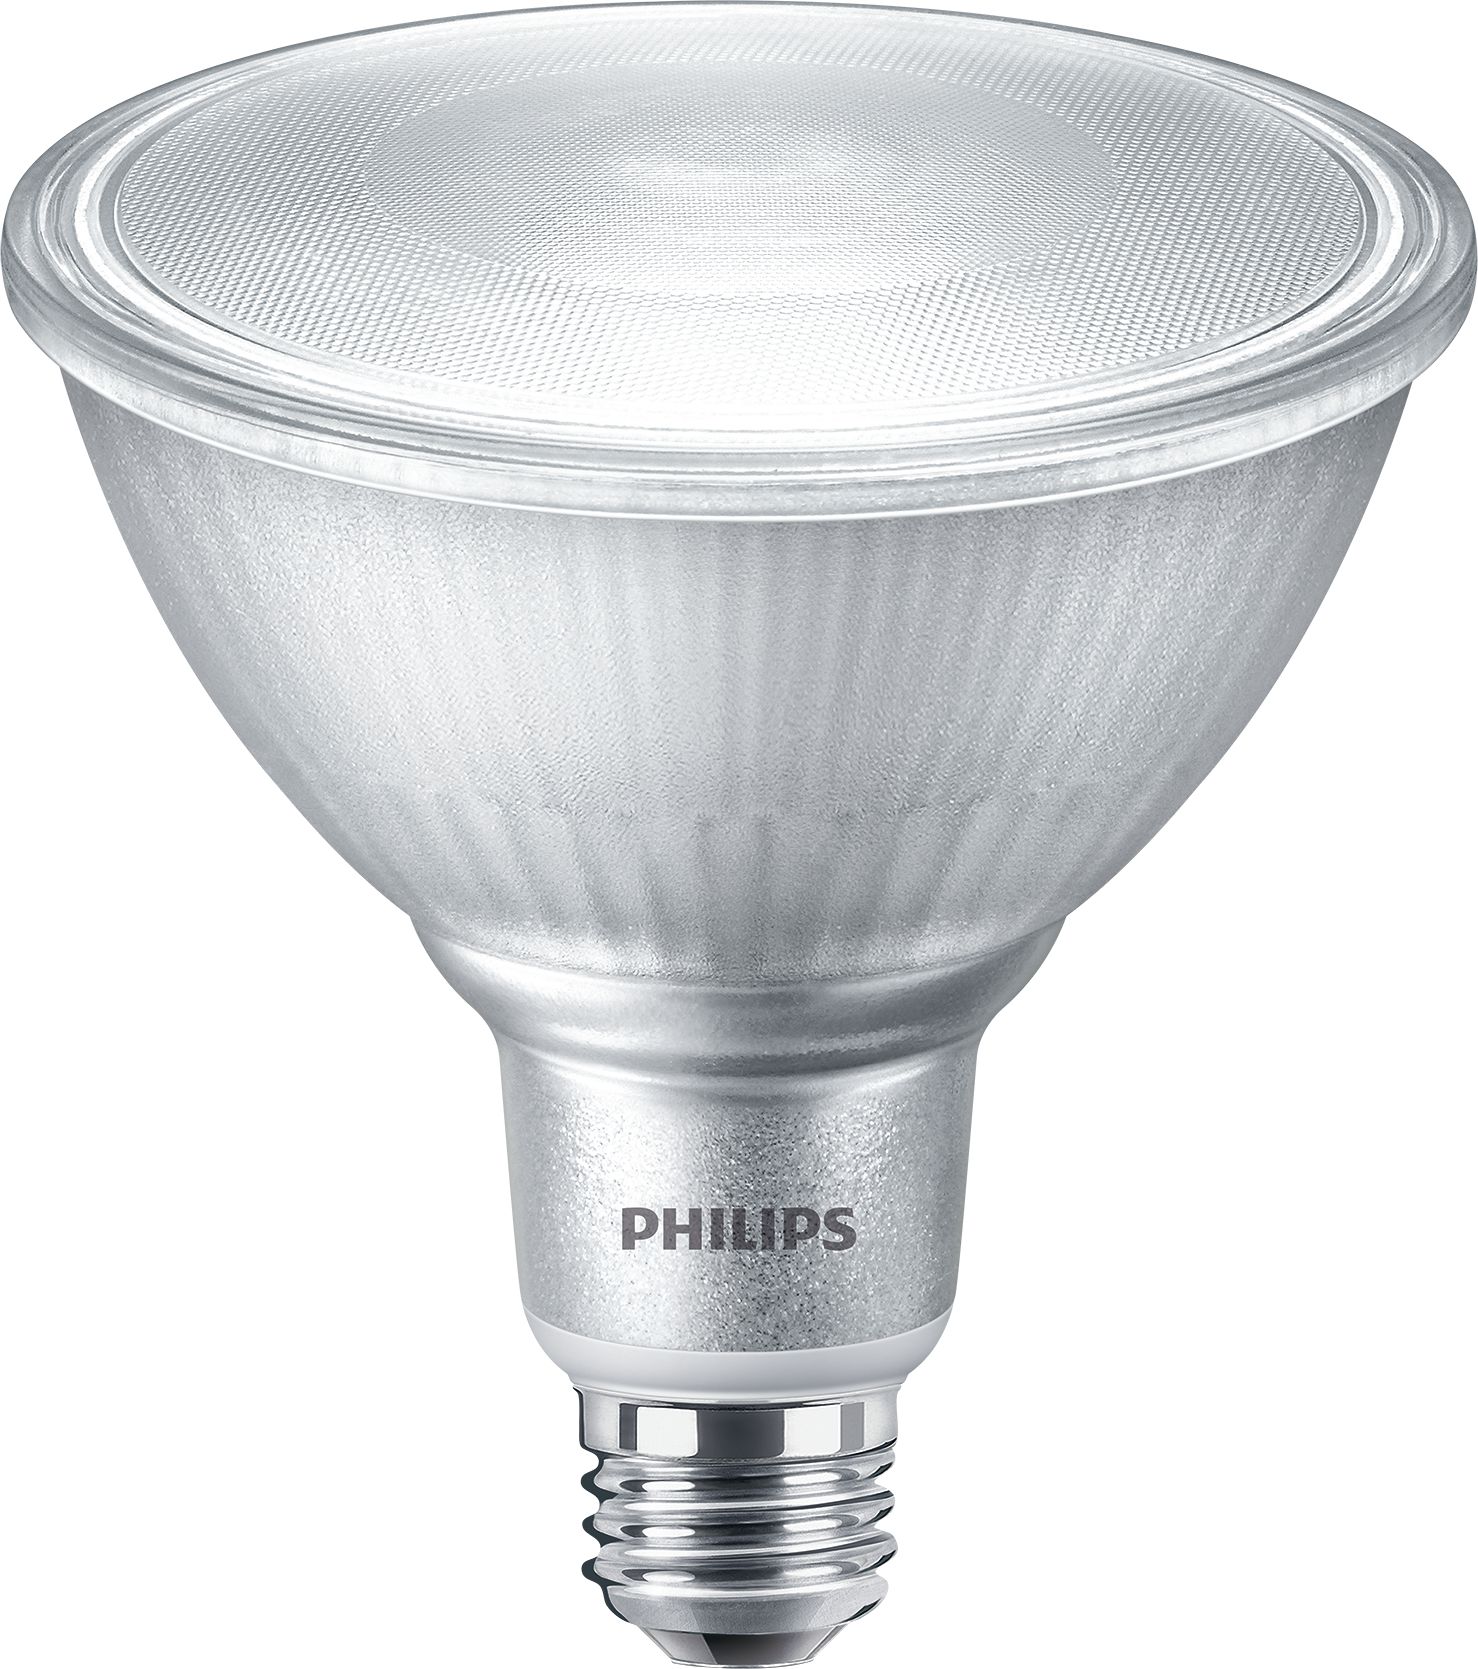 Philips Proiettore LED Ledinaire BVP154 Grigio 50W 5250lm 100D - 840 Bianco  Freddo, IP65 - Simmetrico